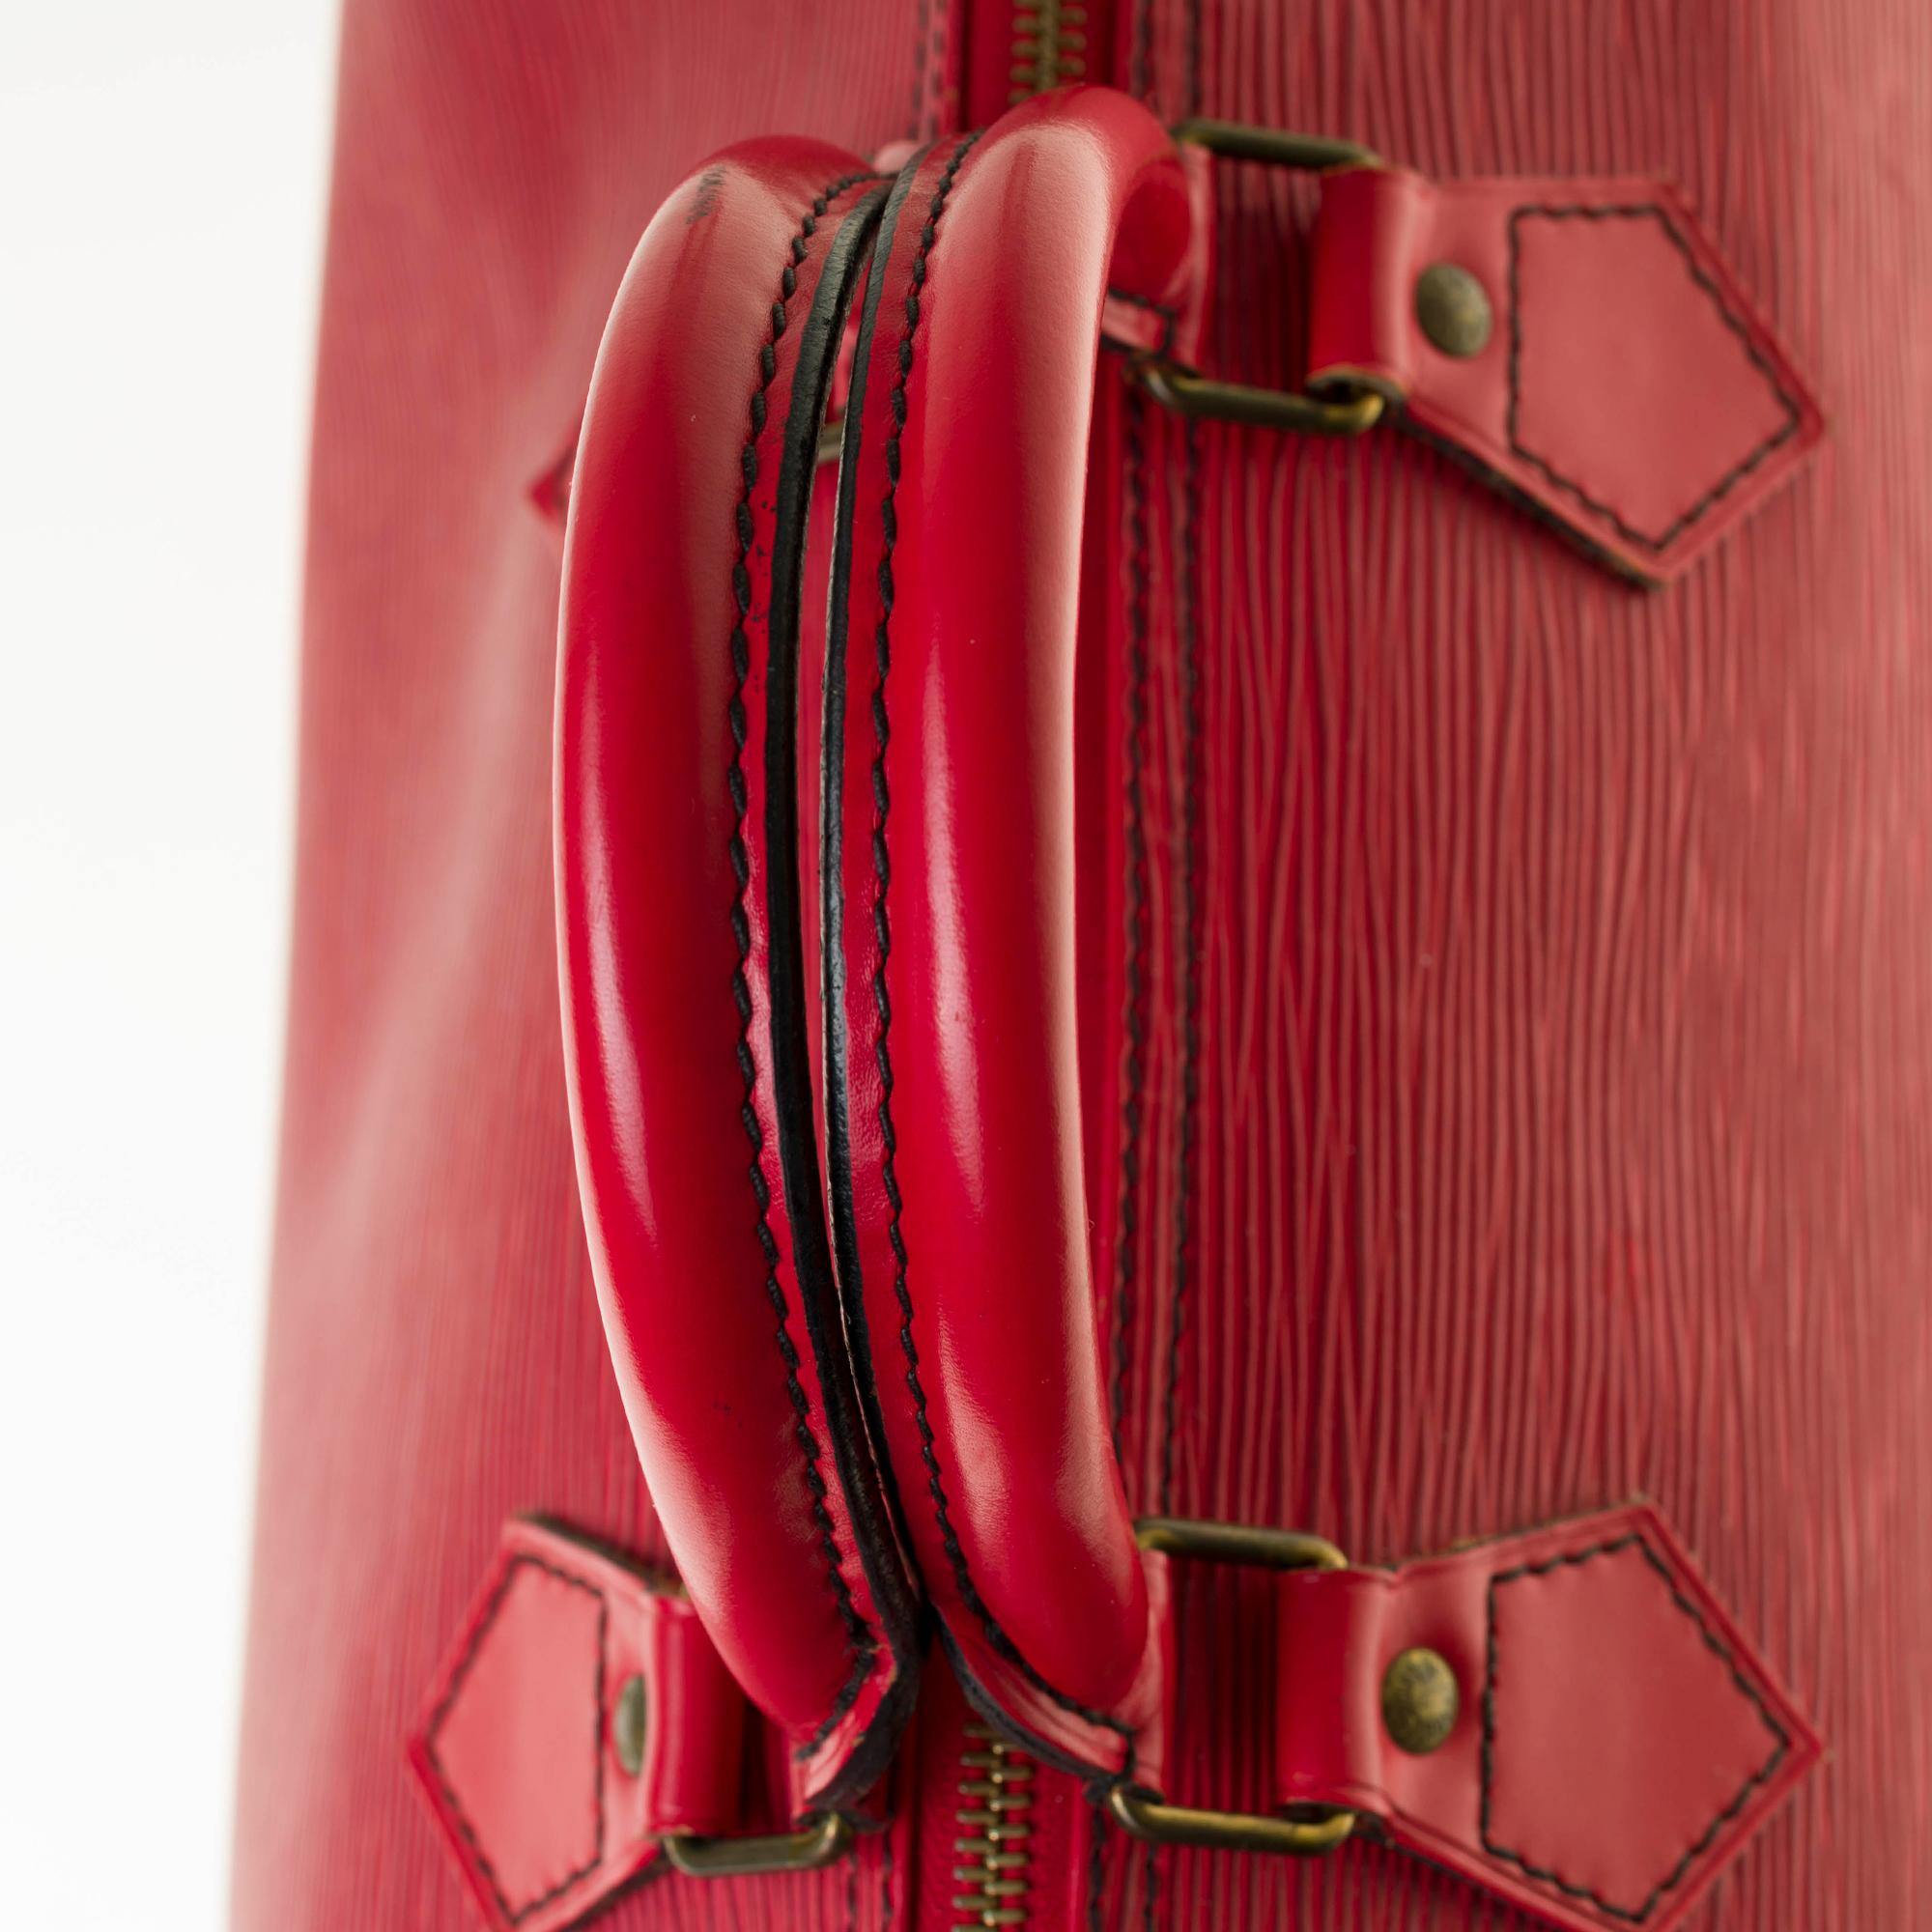 Louis Vuitton Speedy 35 handbag in red épi leather 3